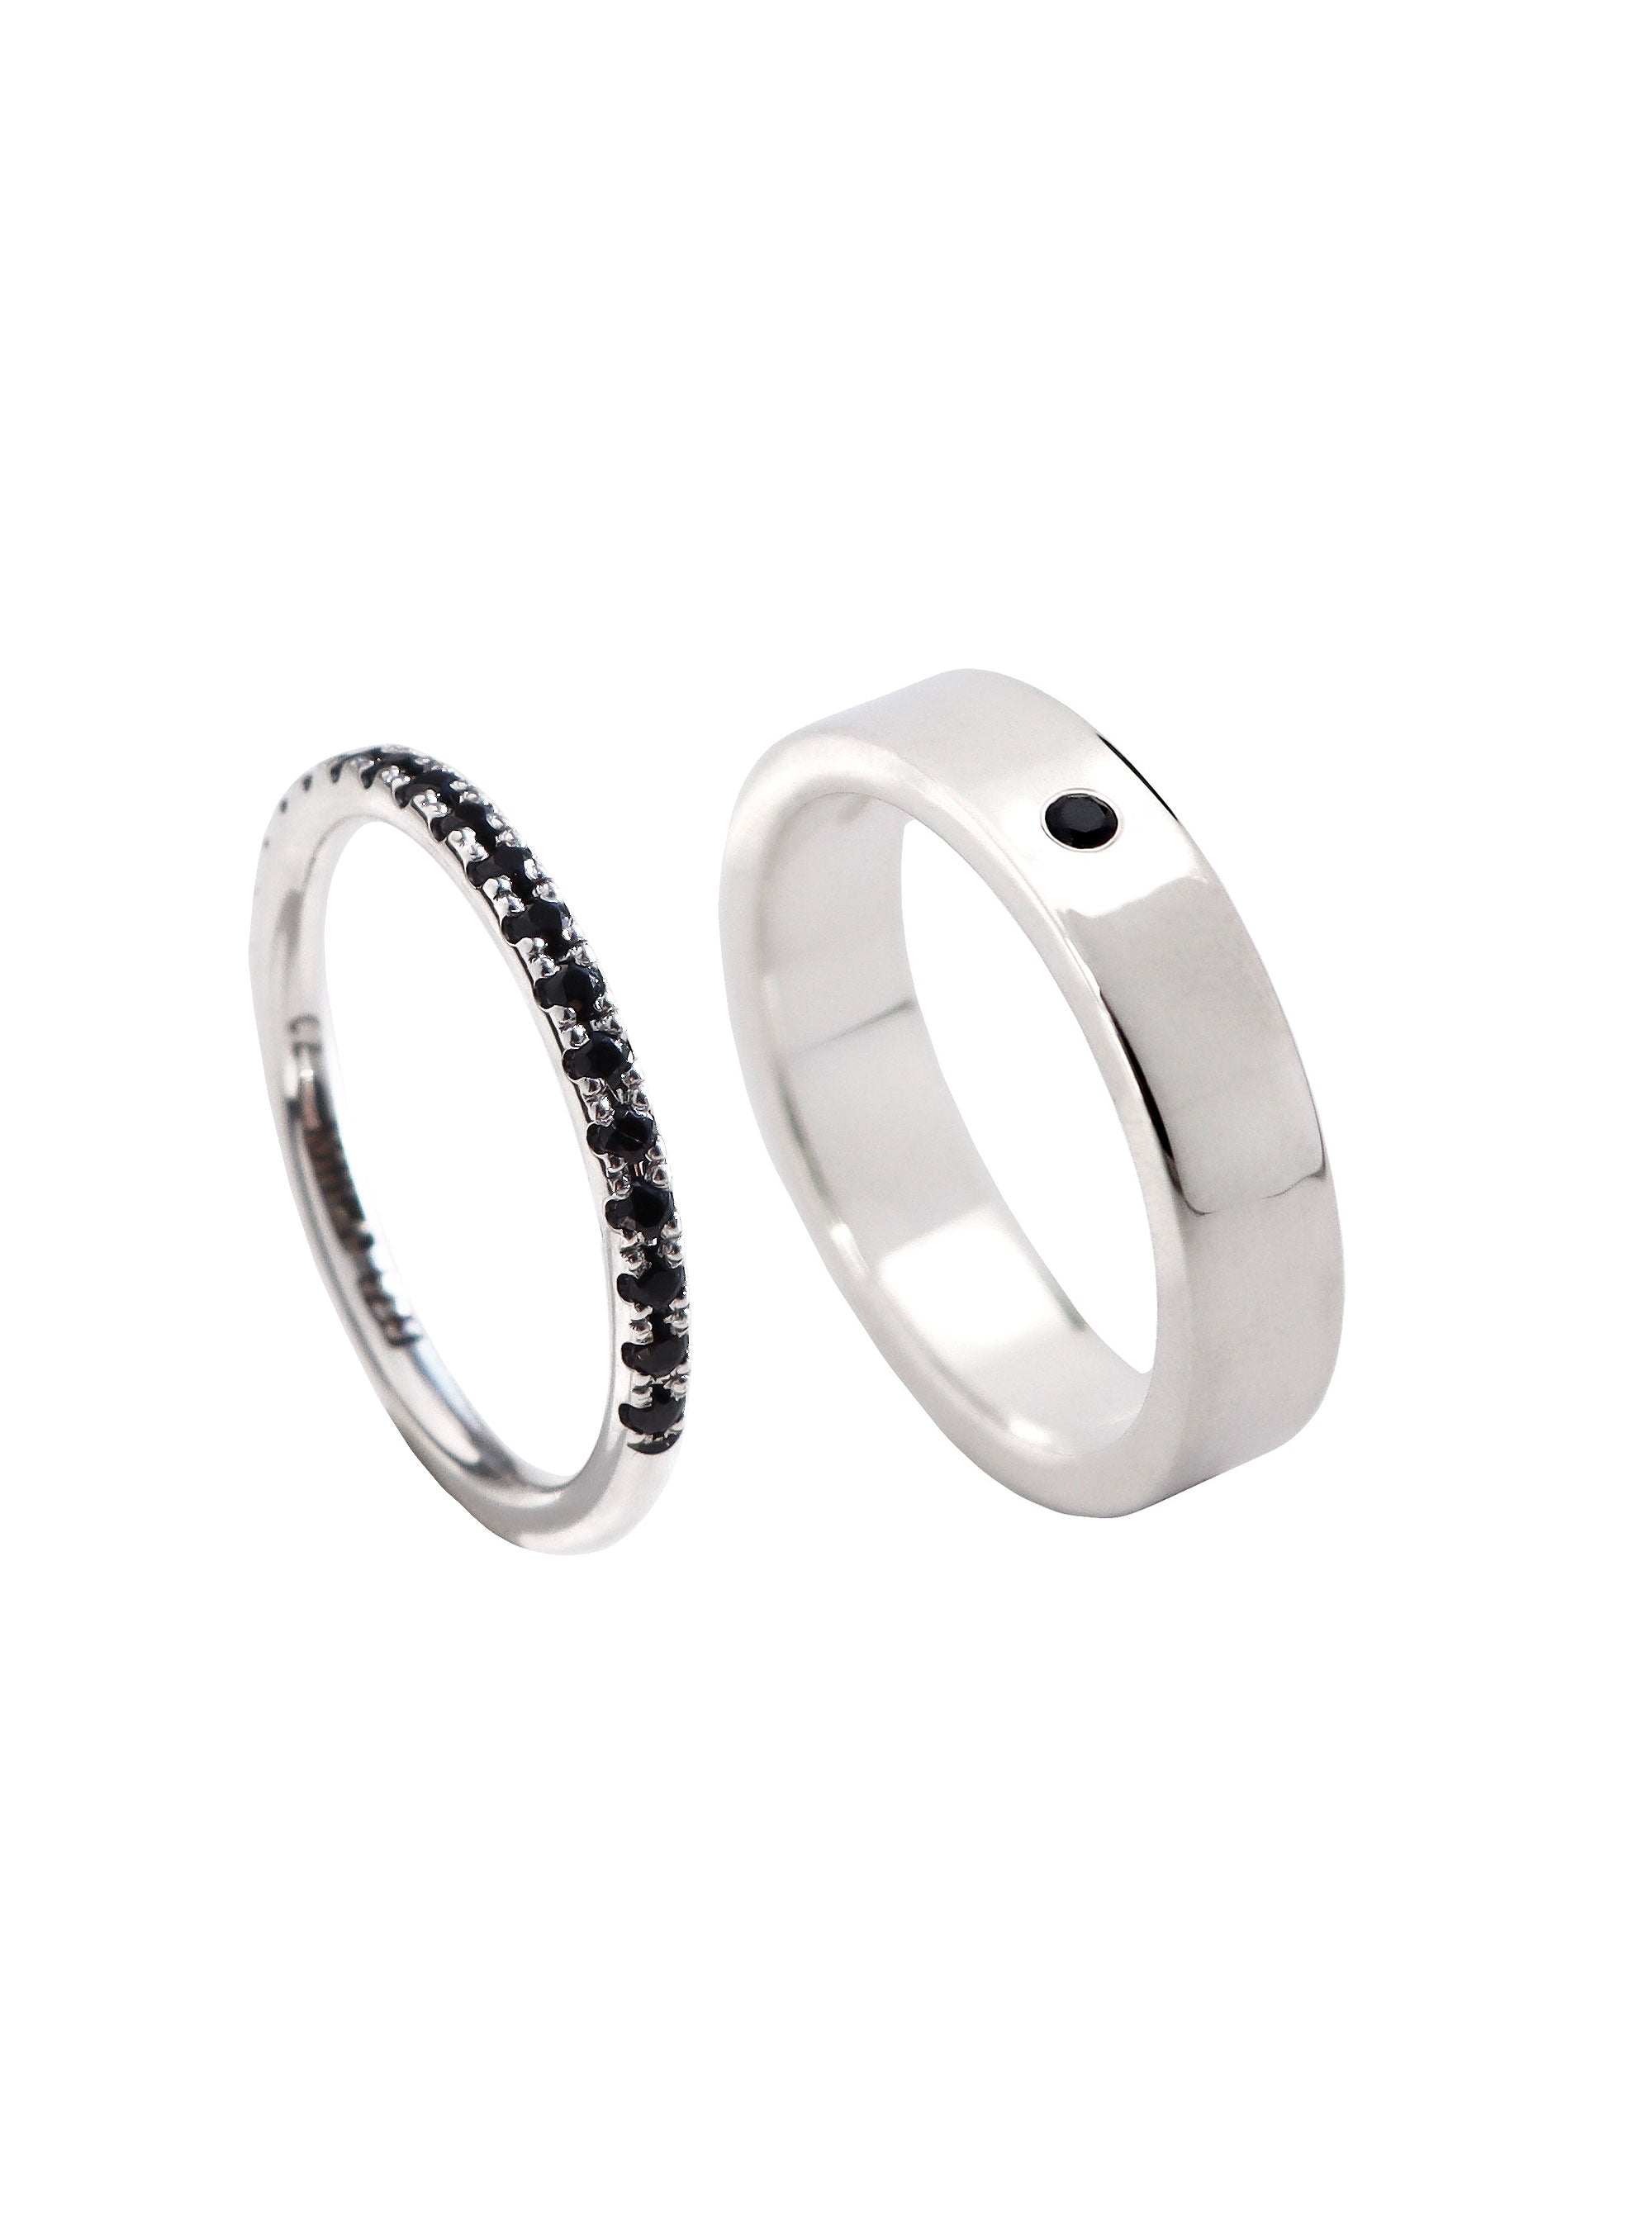 Real 925 Sterling Silver Simple Love Finger Rings For Women Girls Gift Size  5-10 | eBay